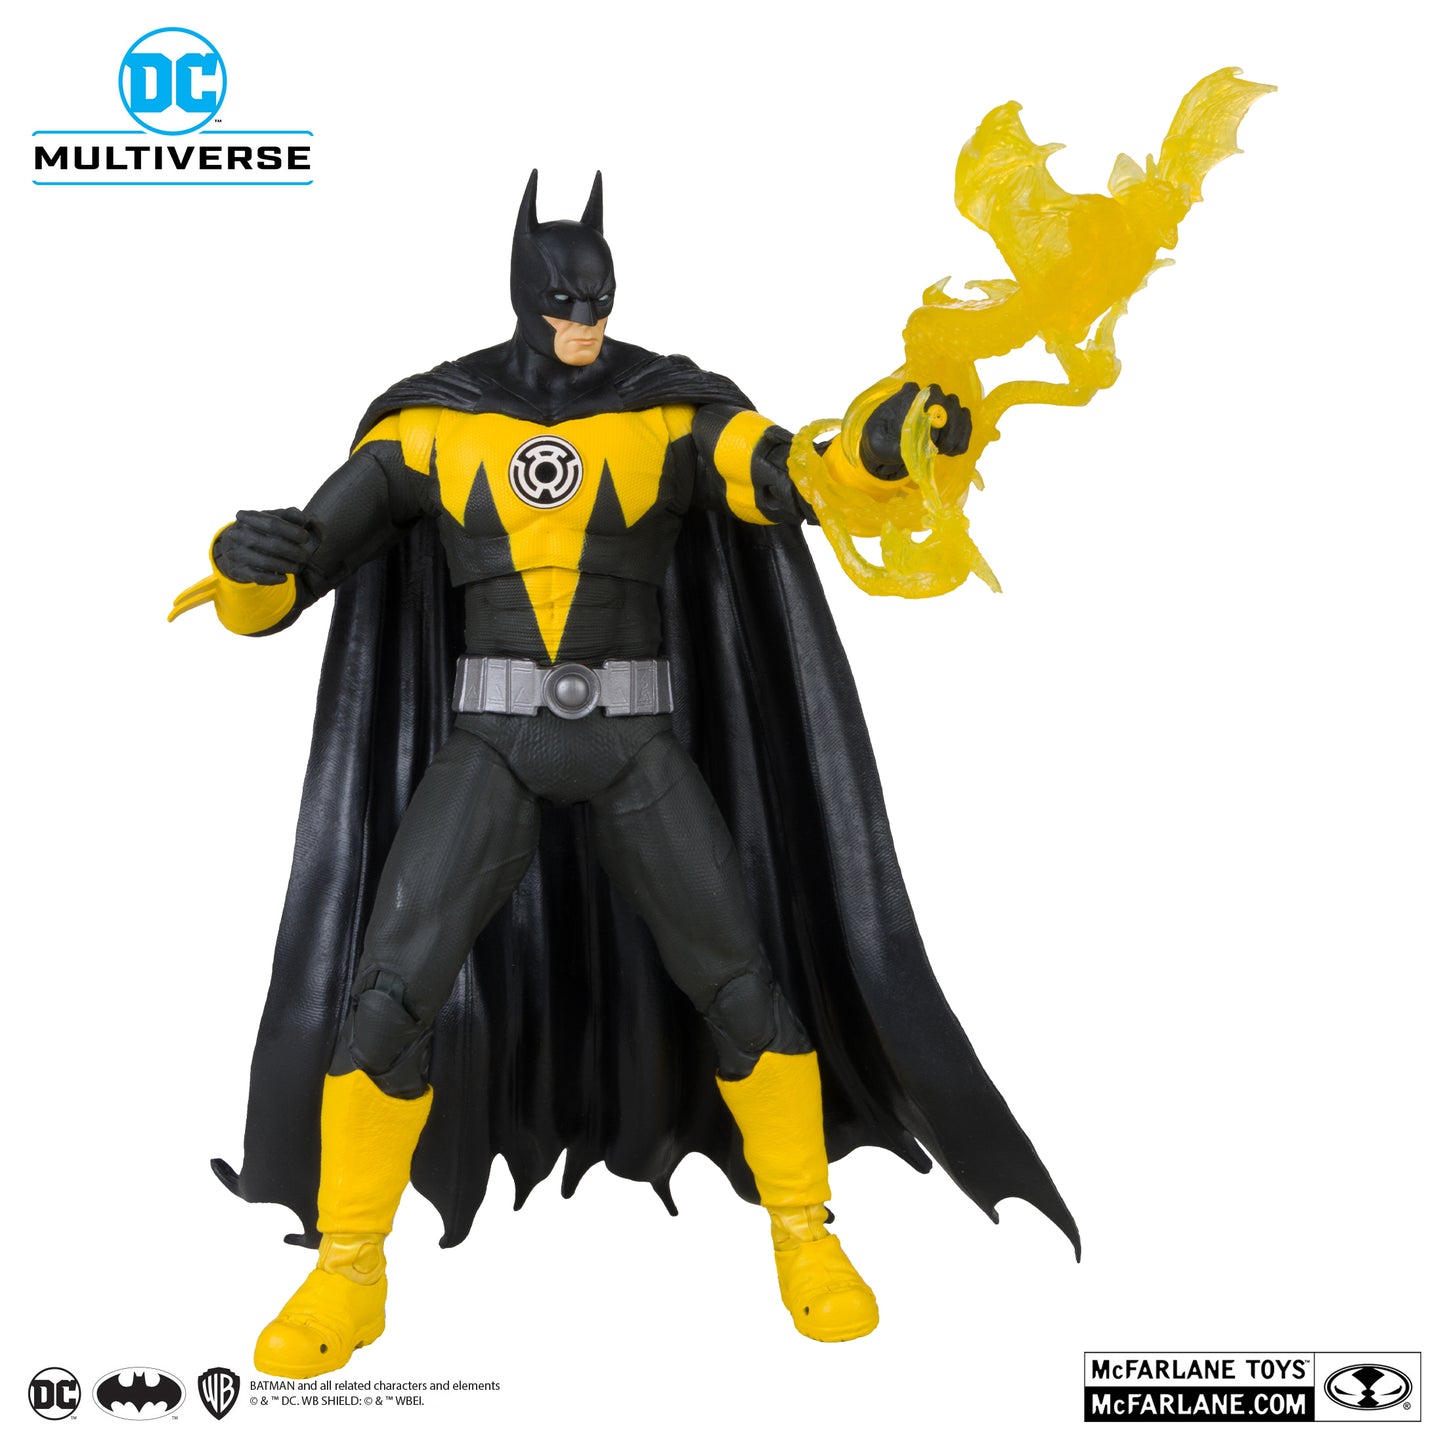 McFarlane Toys DC Multiverse - Batman (Sinestro Corps) [Gold Label]